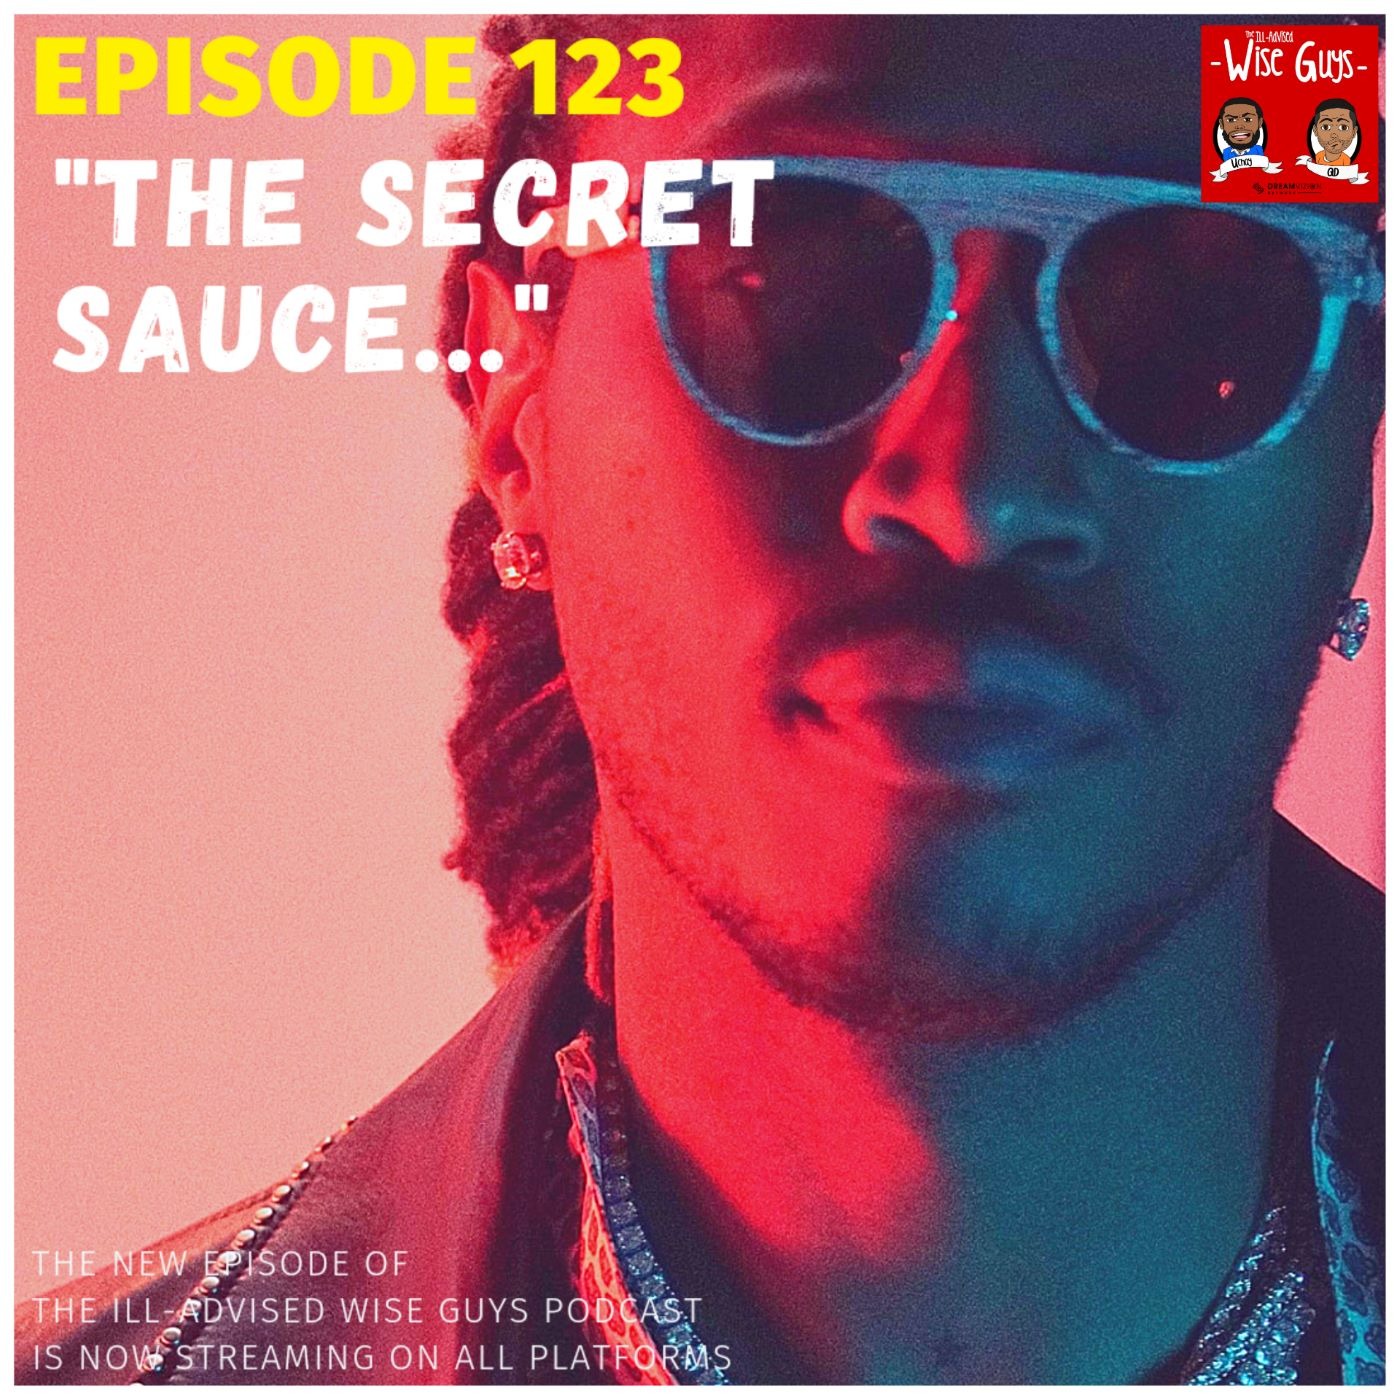 Episode 123 - "The Secret Sauce..." Image